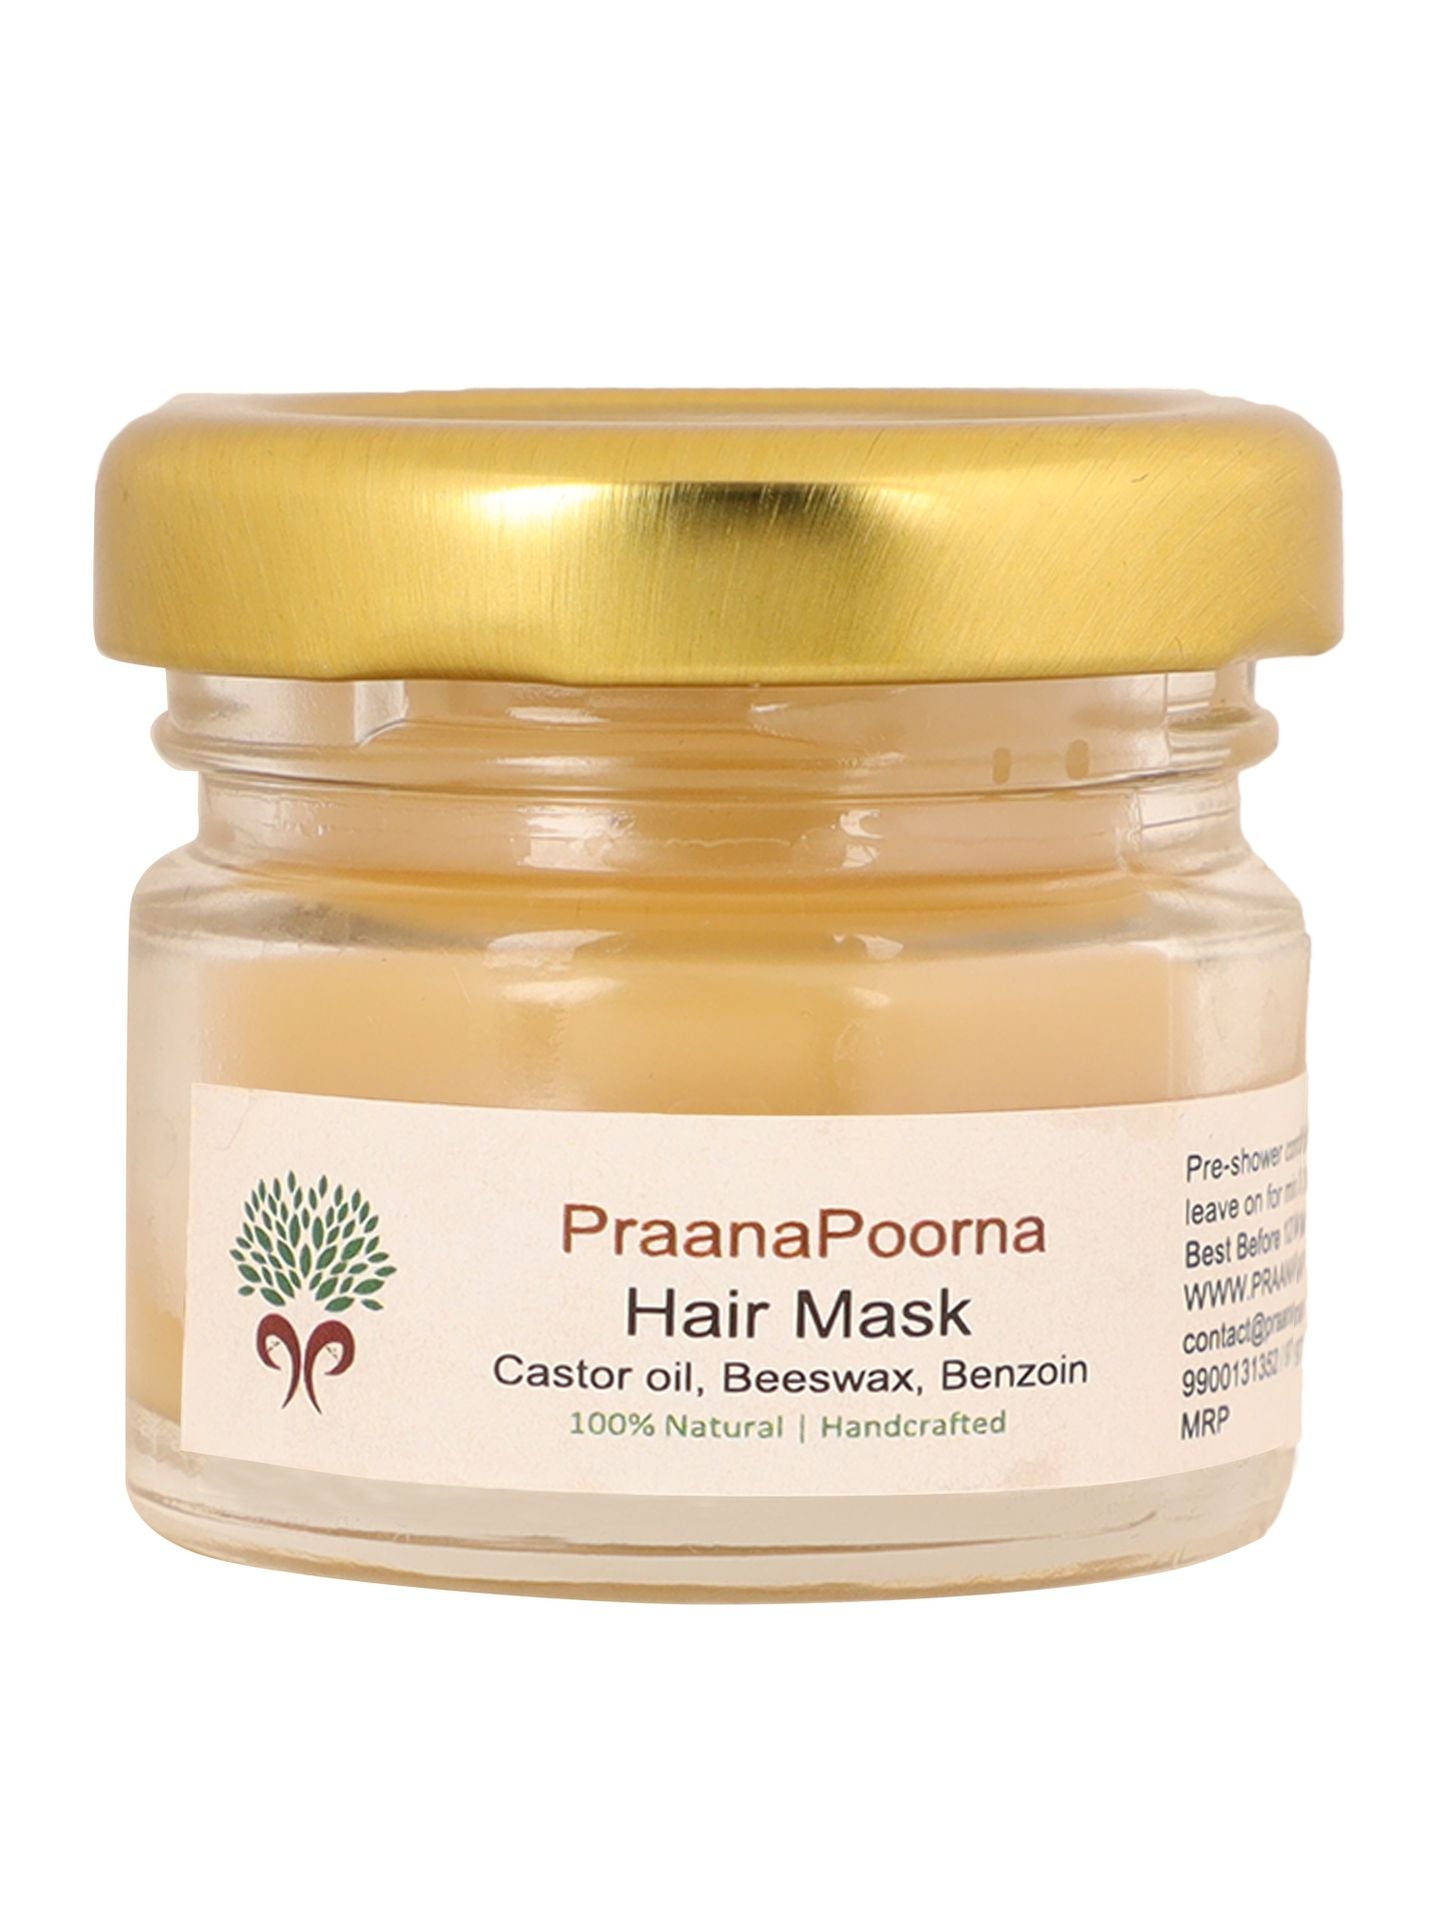 Praanapoorna Hair Mask - Castor oil - hfnl!fe